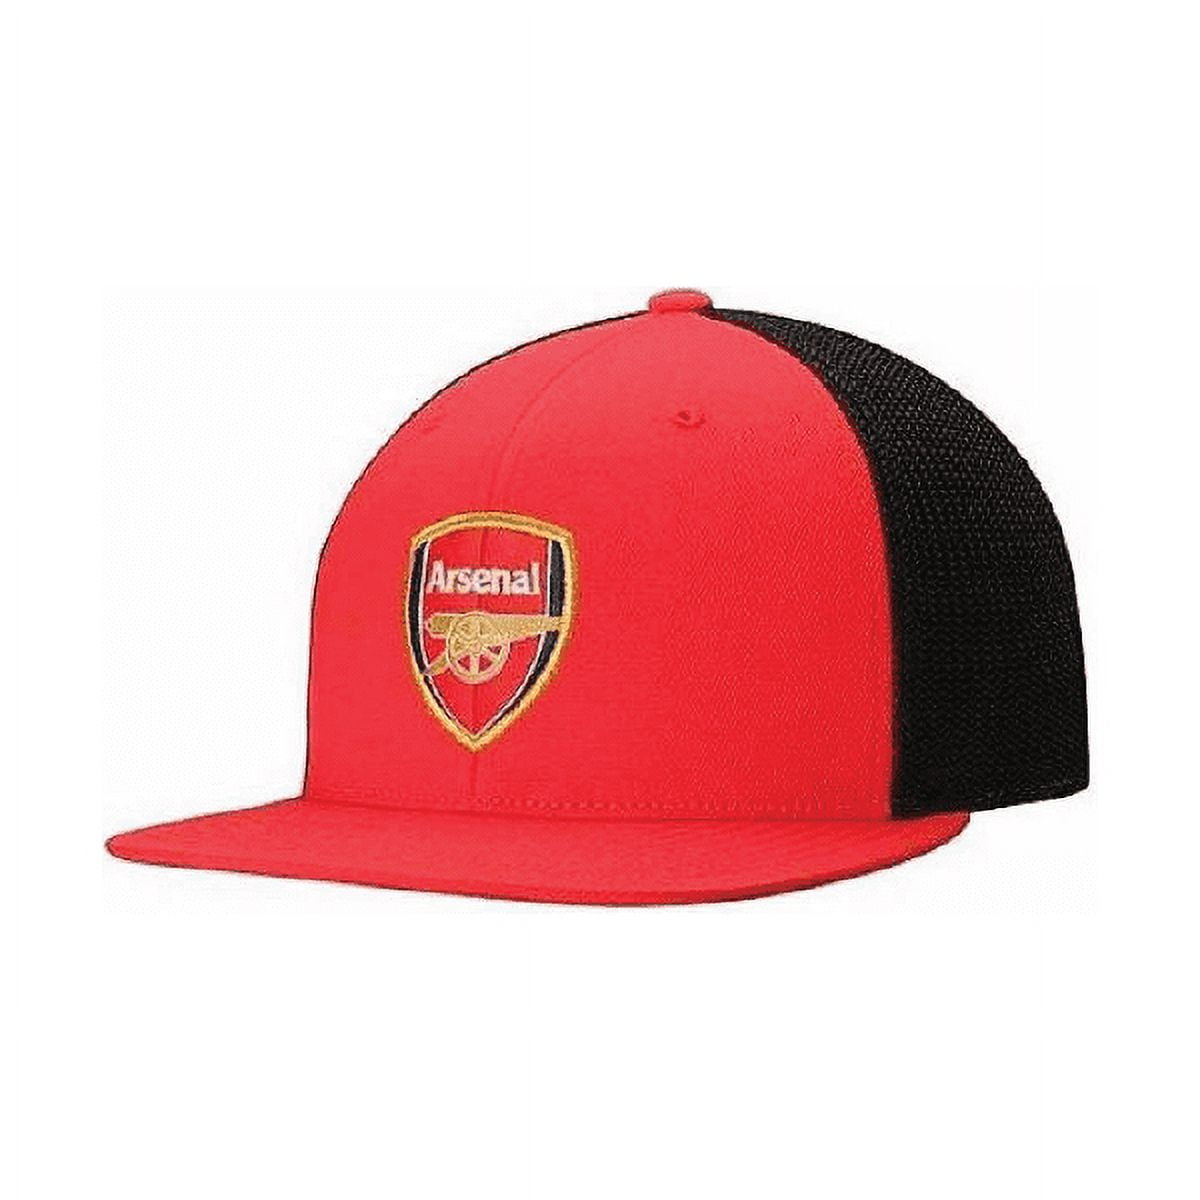 Arsenal FC Puma 110 Snapback Flex Hat - Red/Black - OSFA